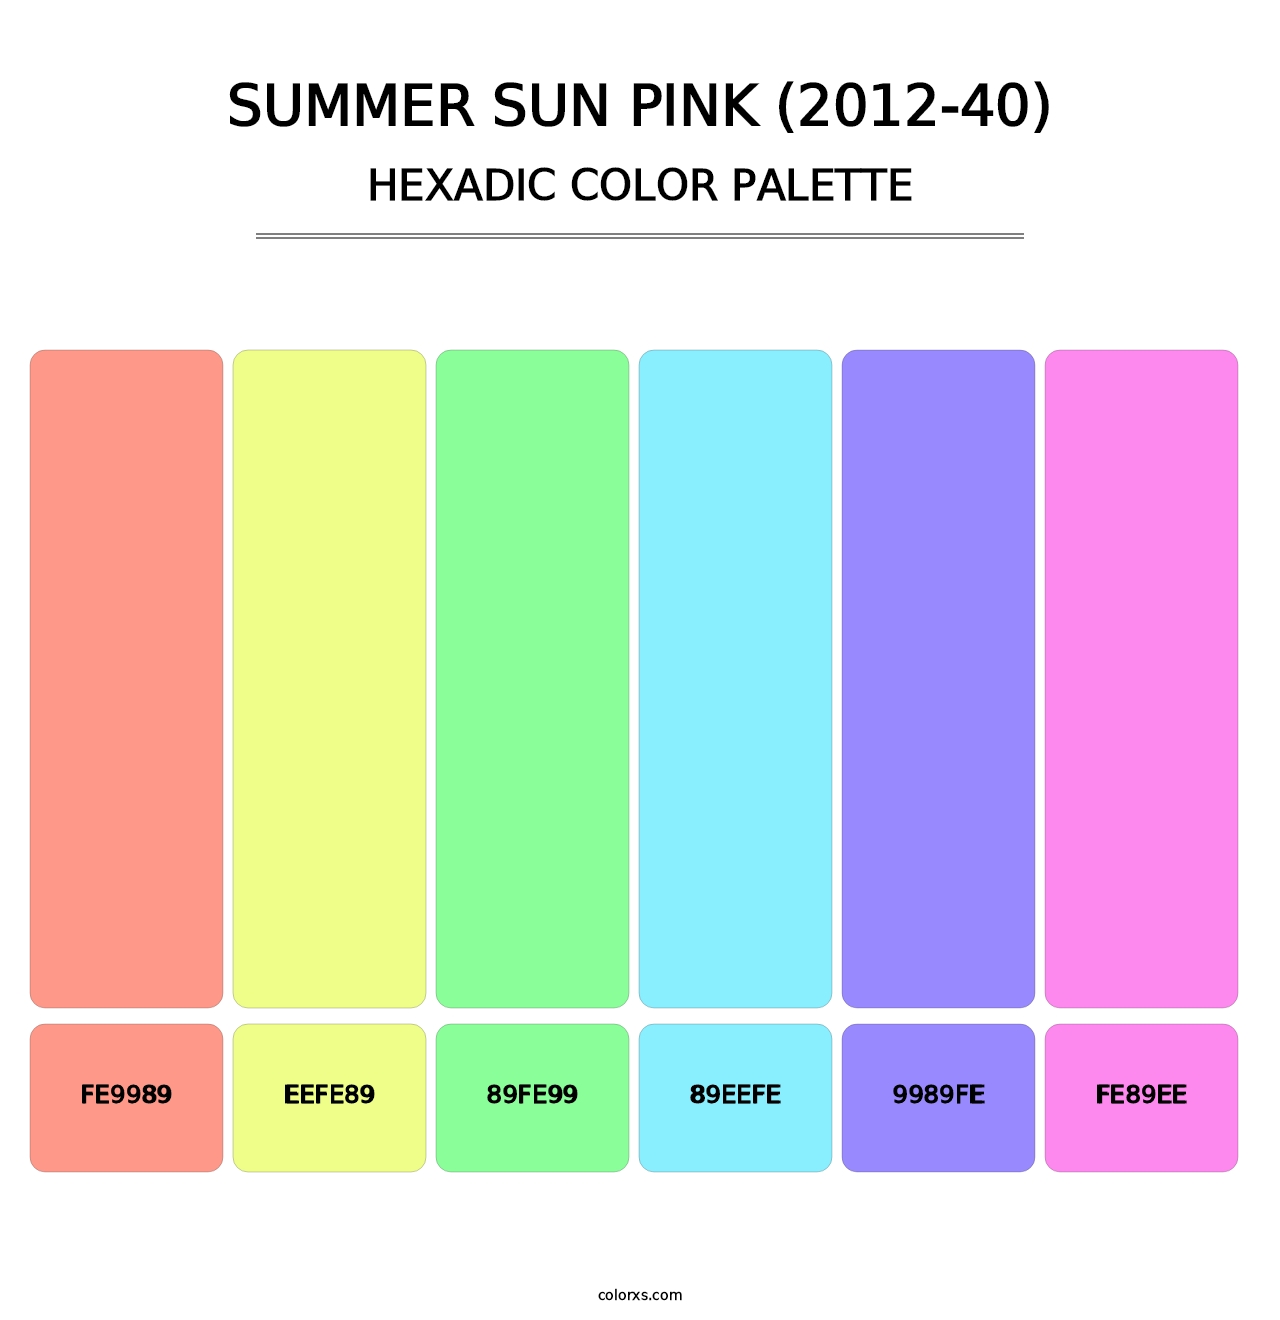 Summer Sun Pink (2012-40) - Hexadic Color Palette